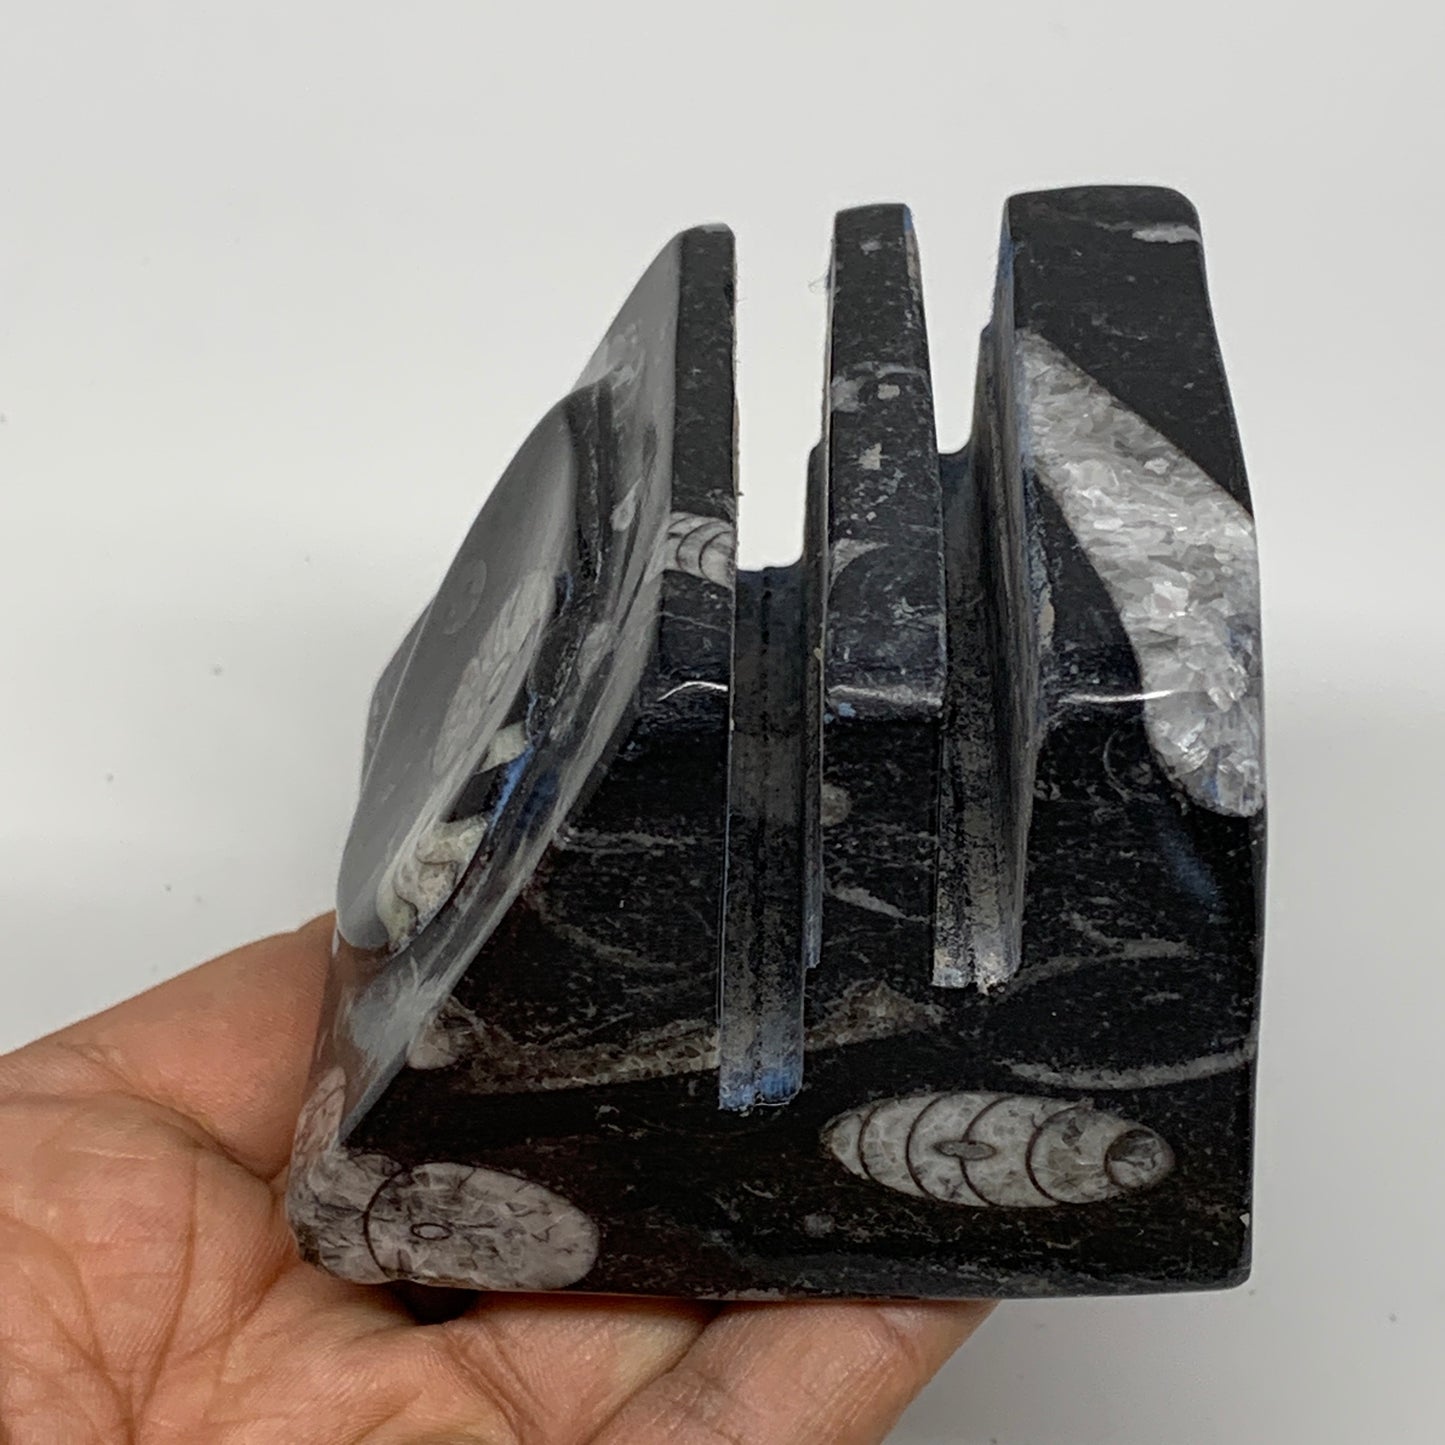 470g, 2.6" x 2.8" x 2.1" Black Fossils Orthoceras Ammonite Business Card Holder,